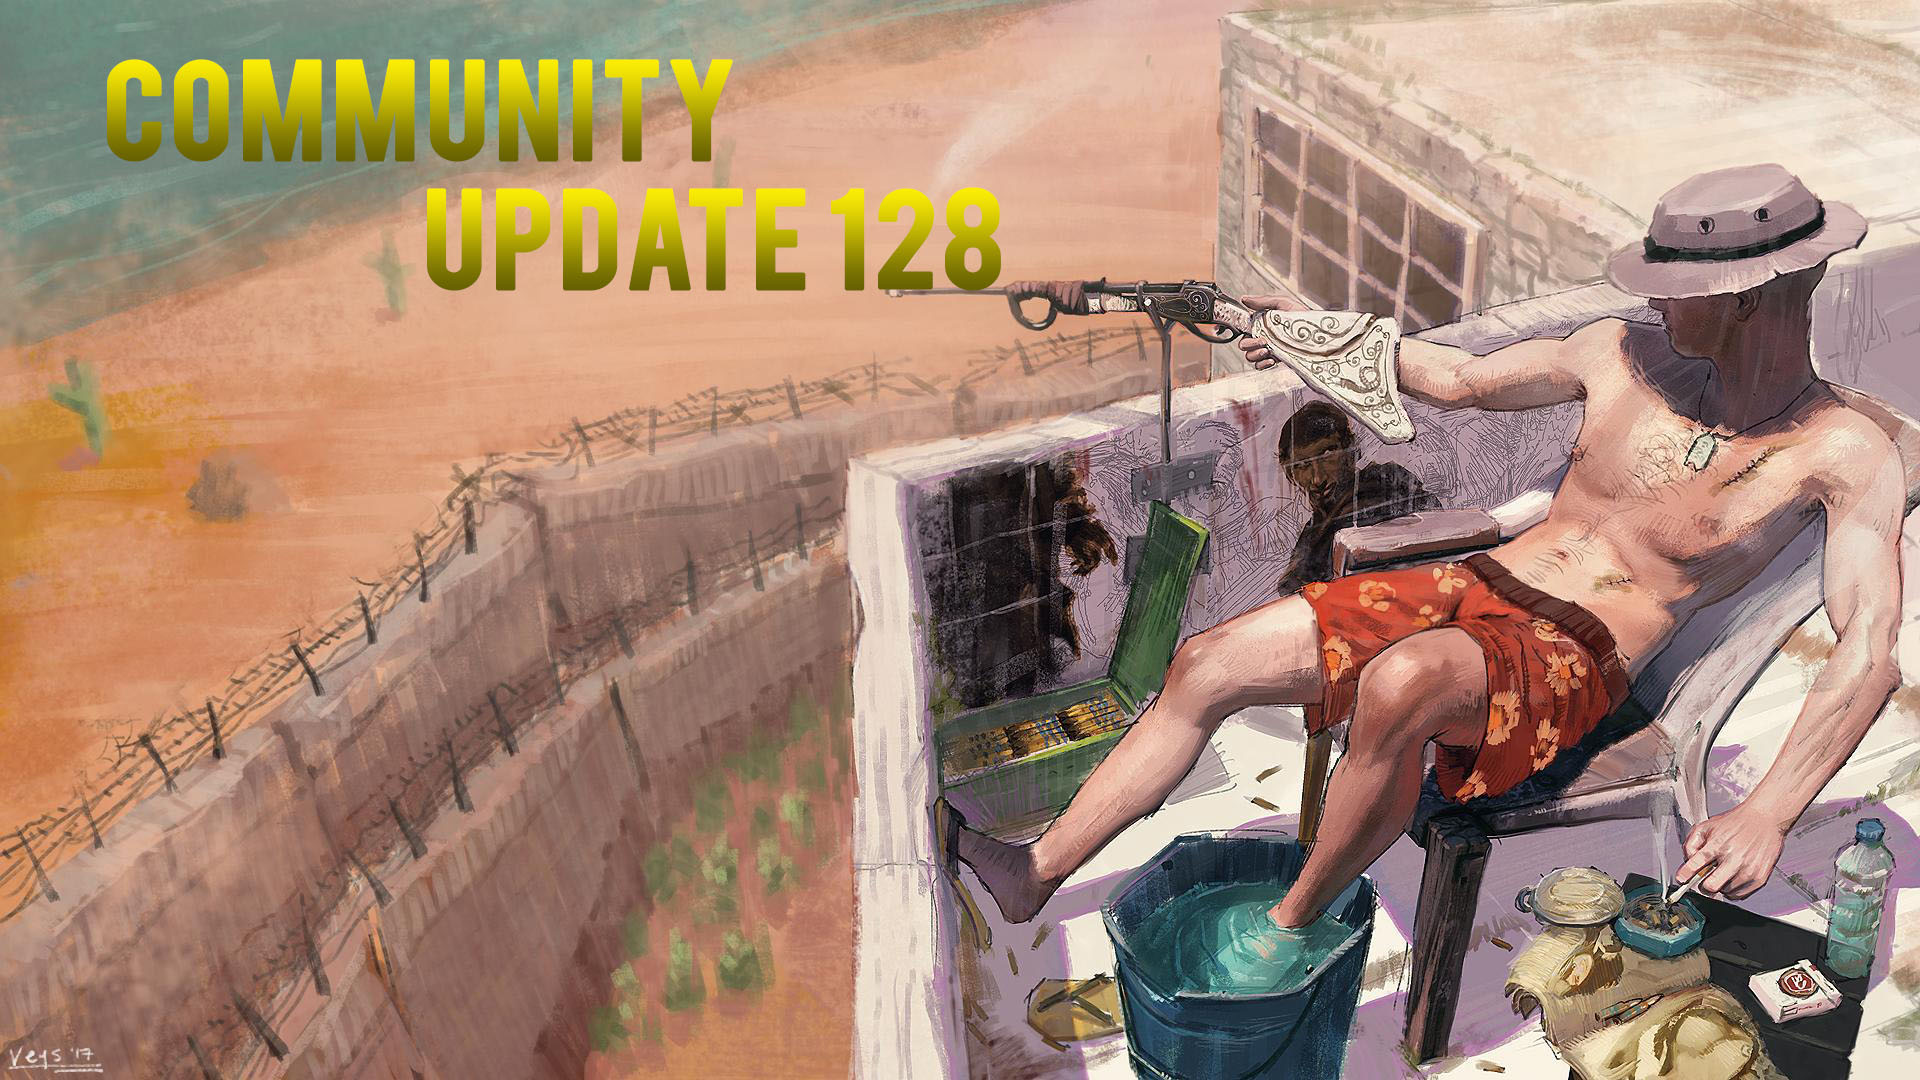 Community Update 128